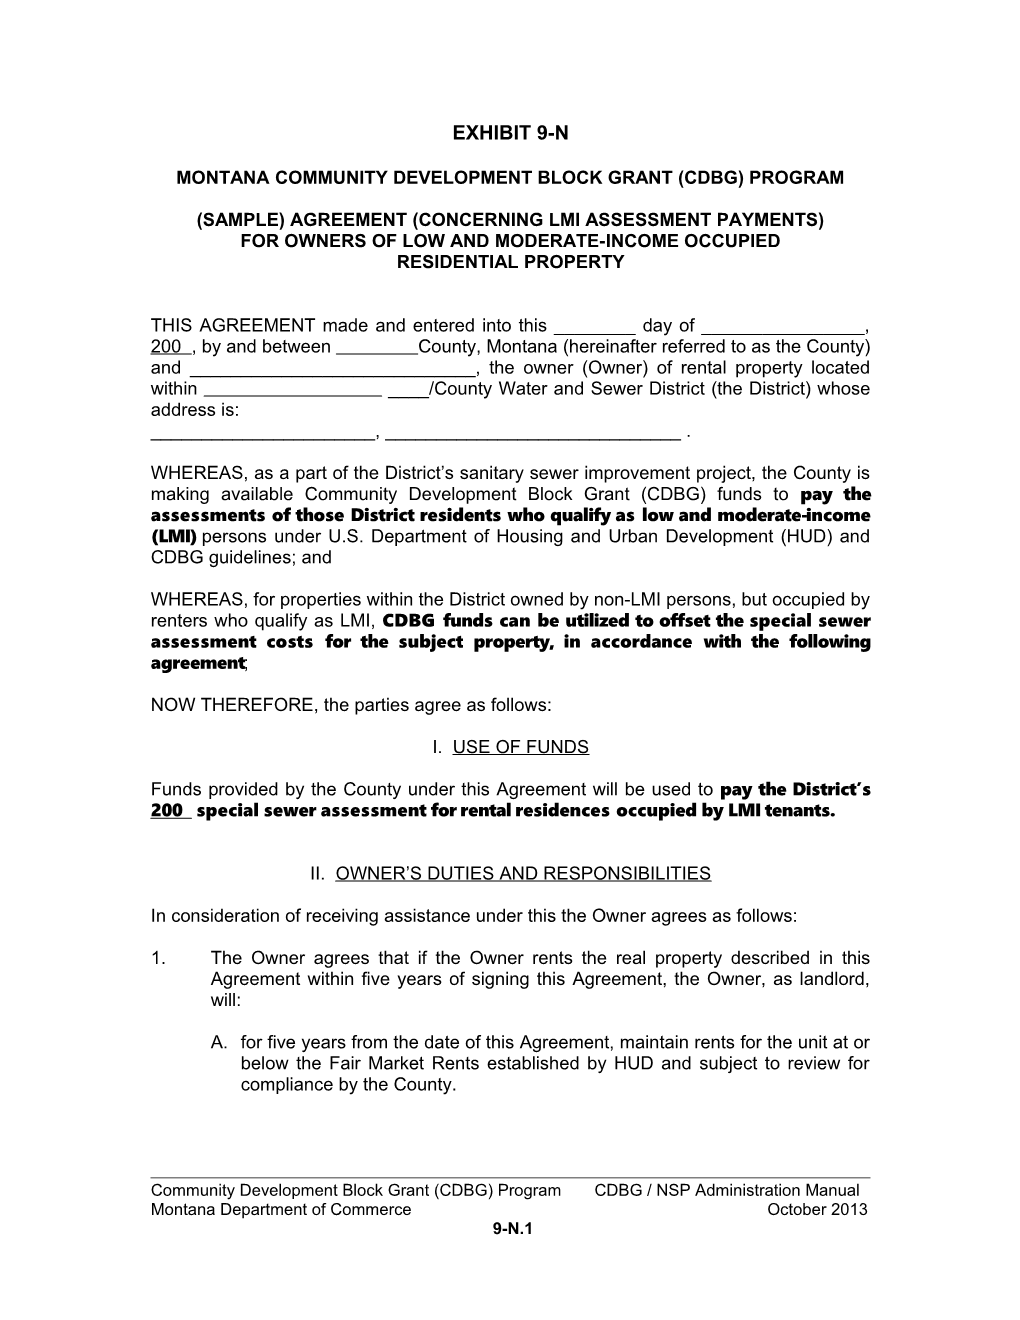 Montana Community Development Block Grant (Cdbg) Program